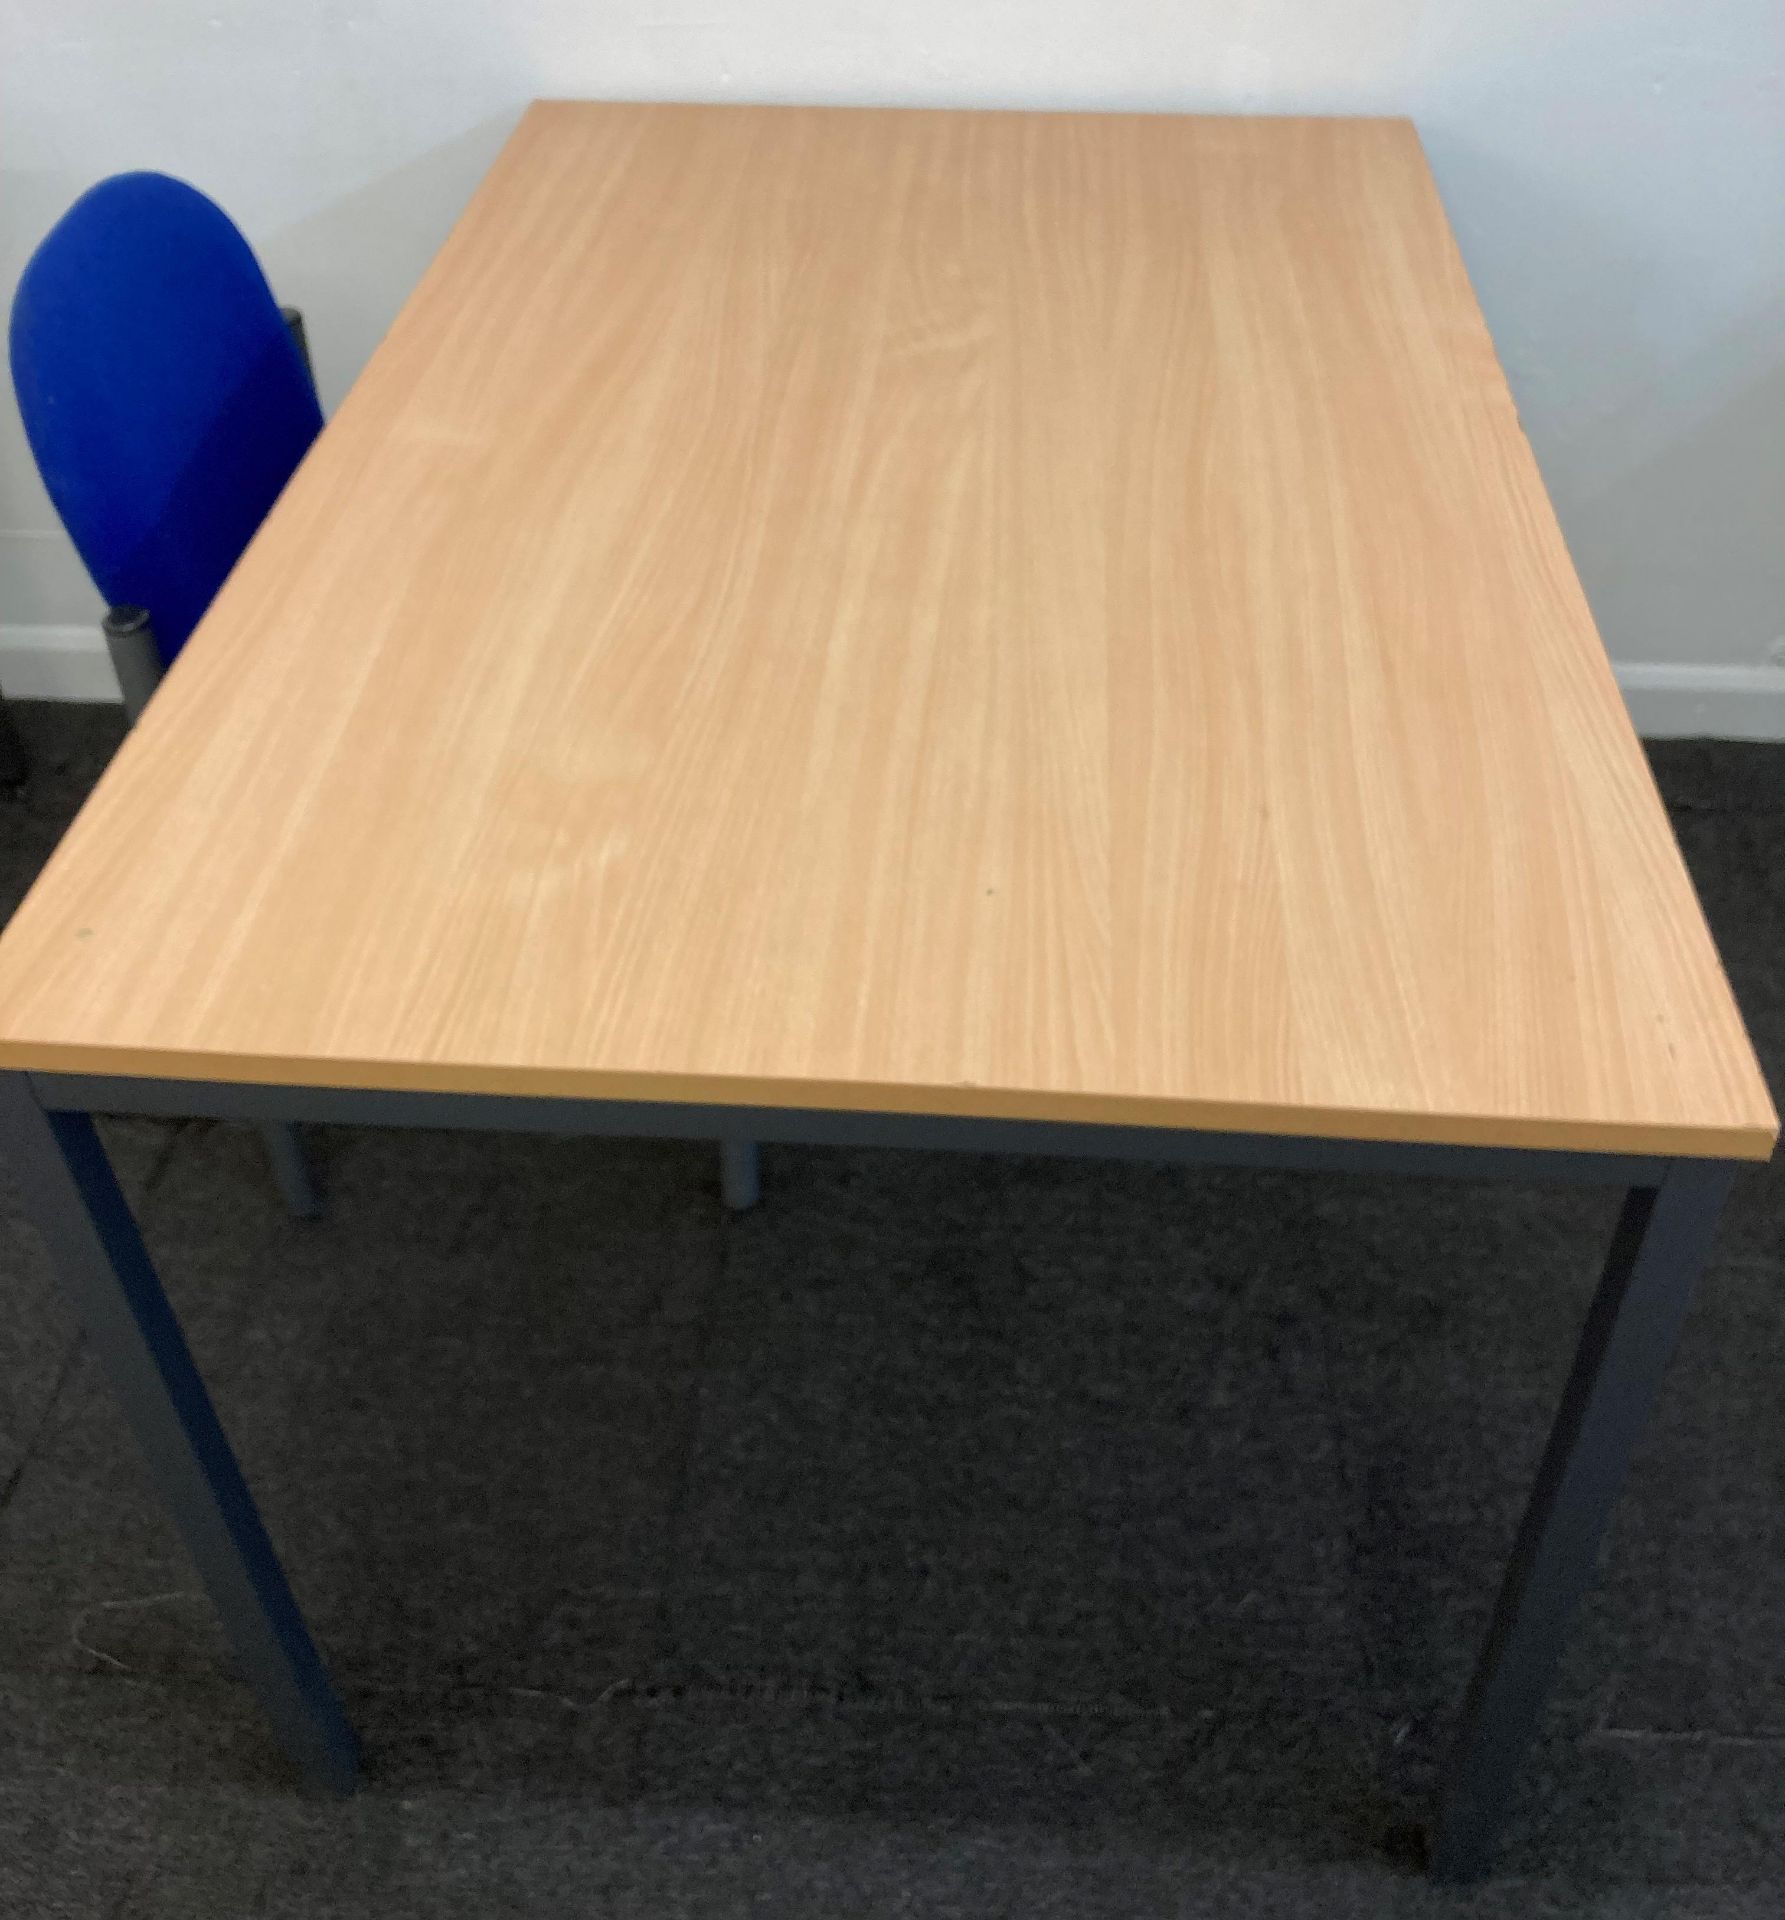 Contents to teaching room - three beech desks (160cm x 80cm), four beech desks (120cm x 80cm), - Image 4 of 6